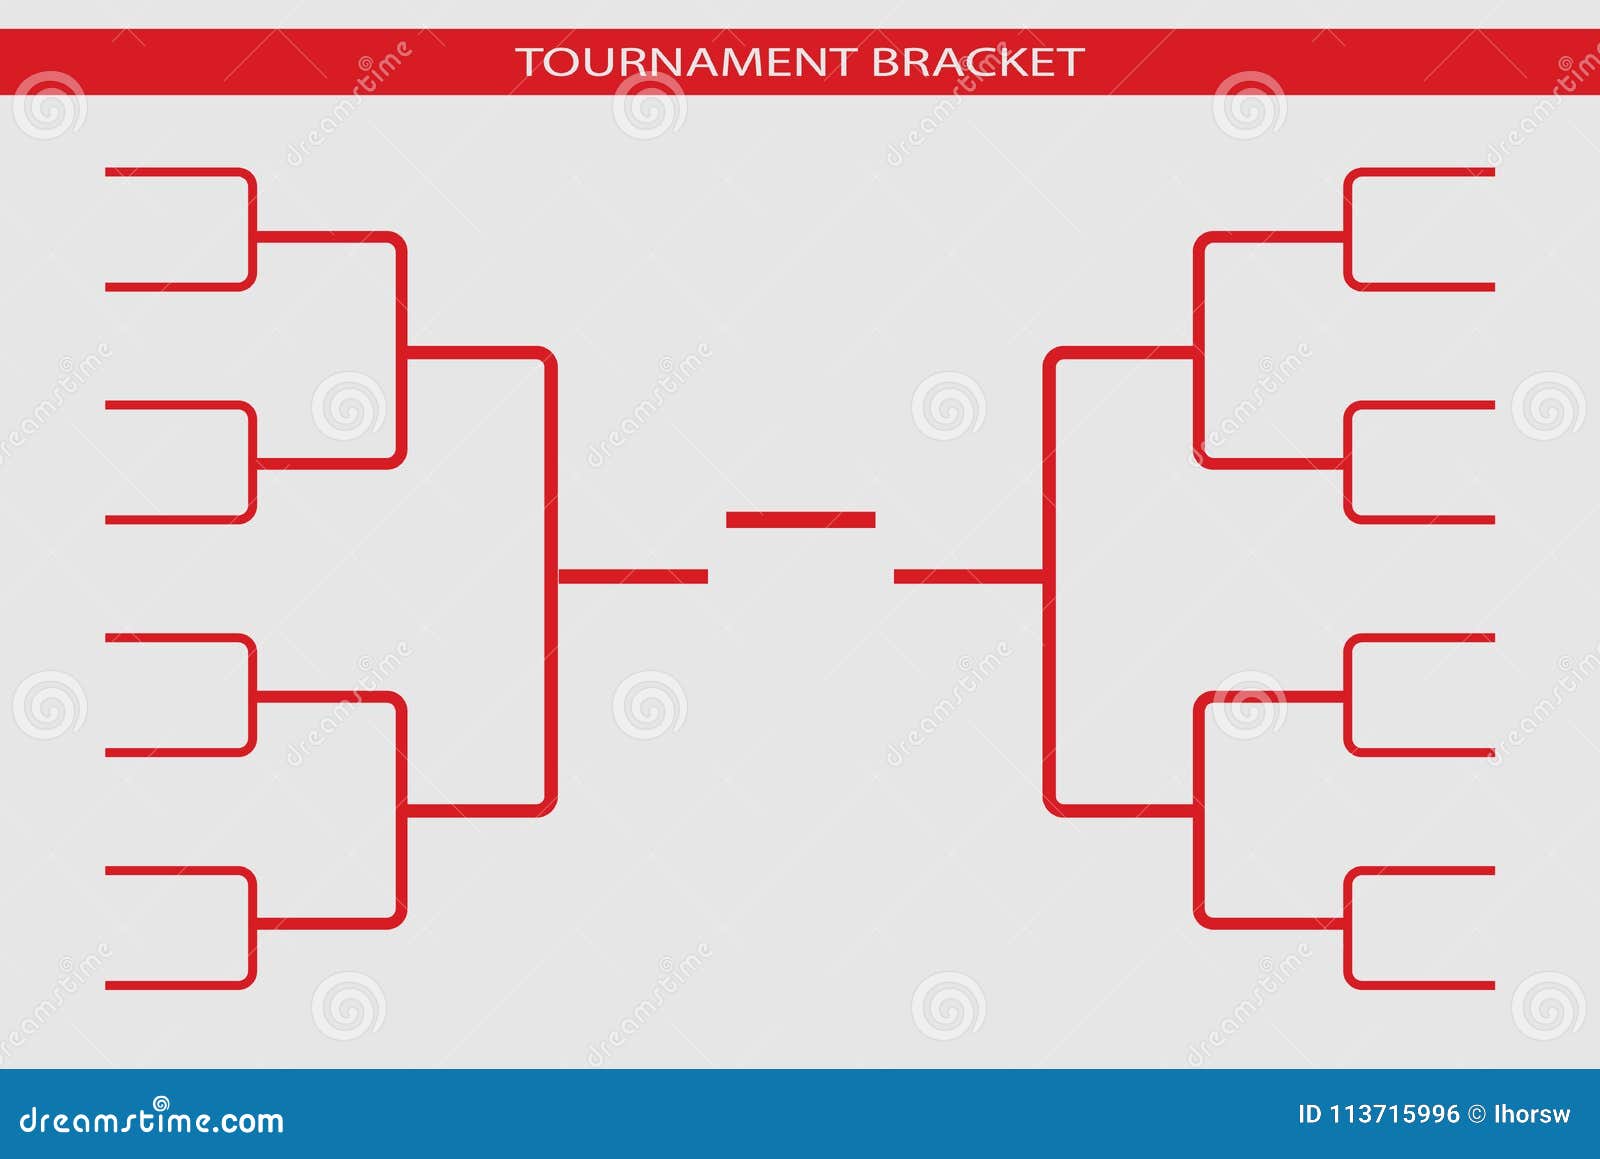 Tournament bracket Royalty Free Vector Image - VectorStock